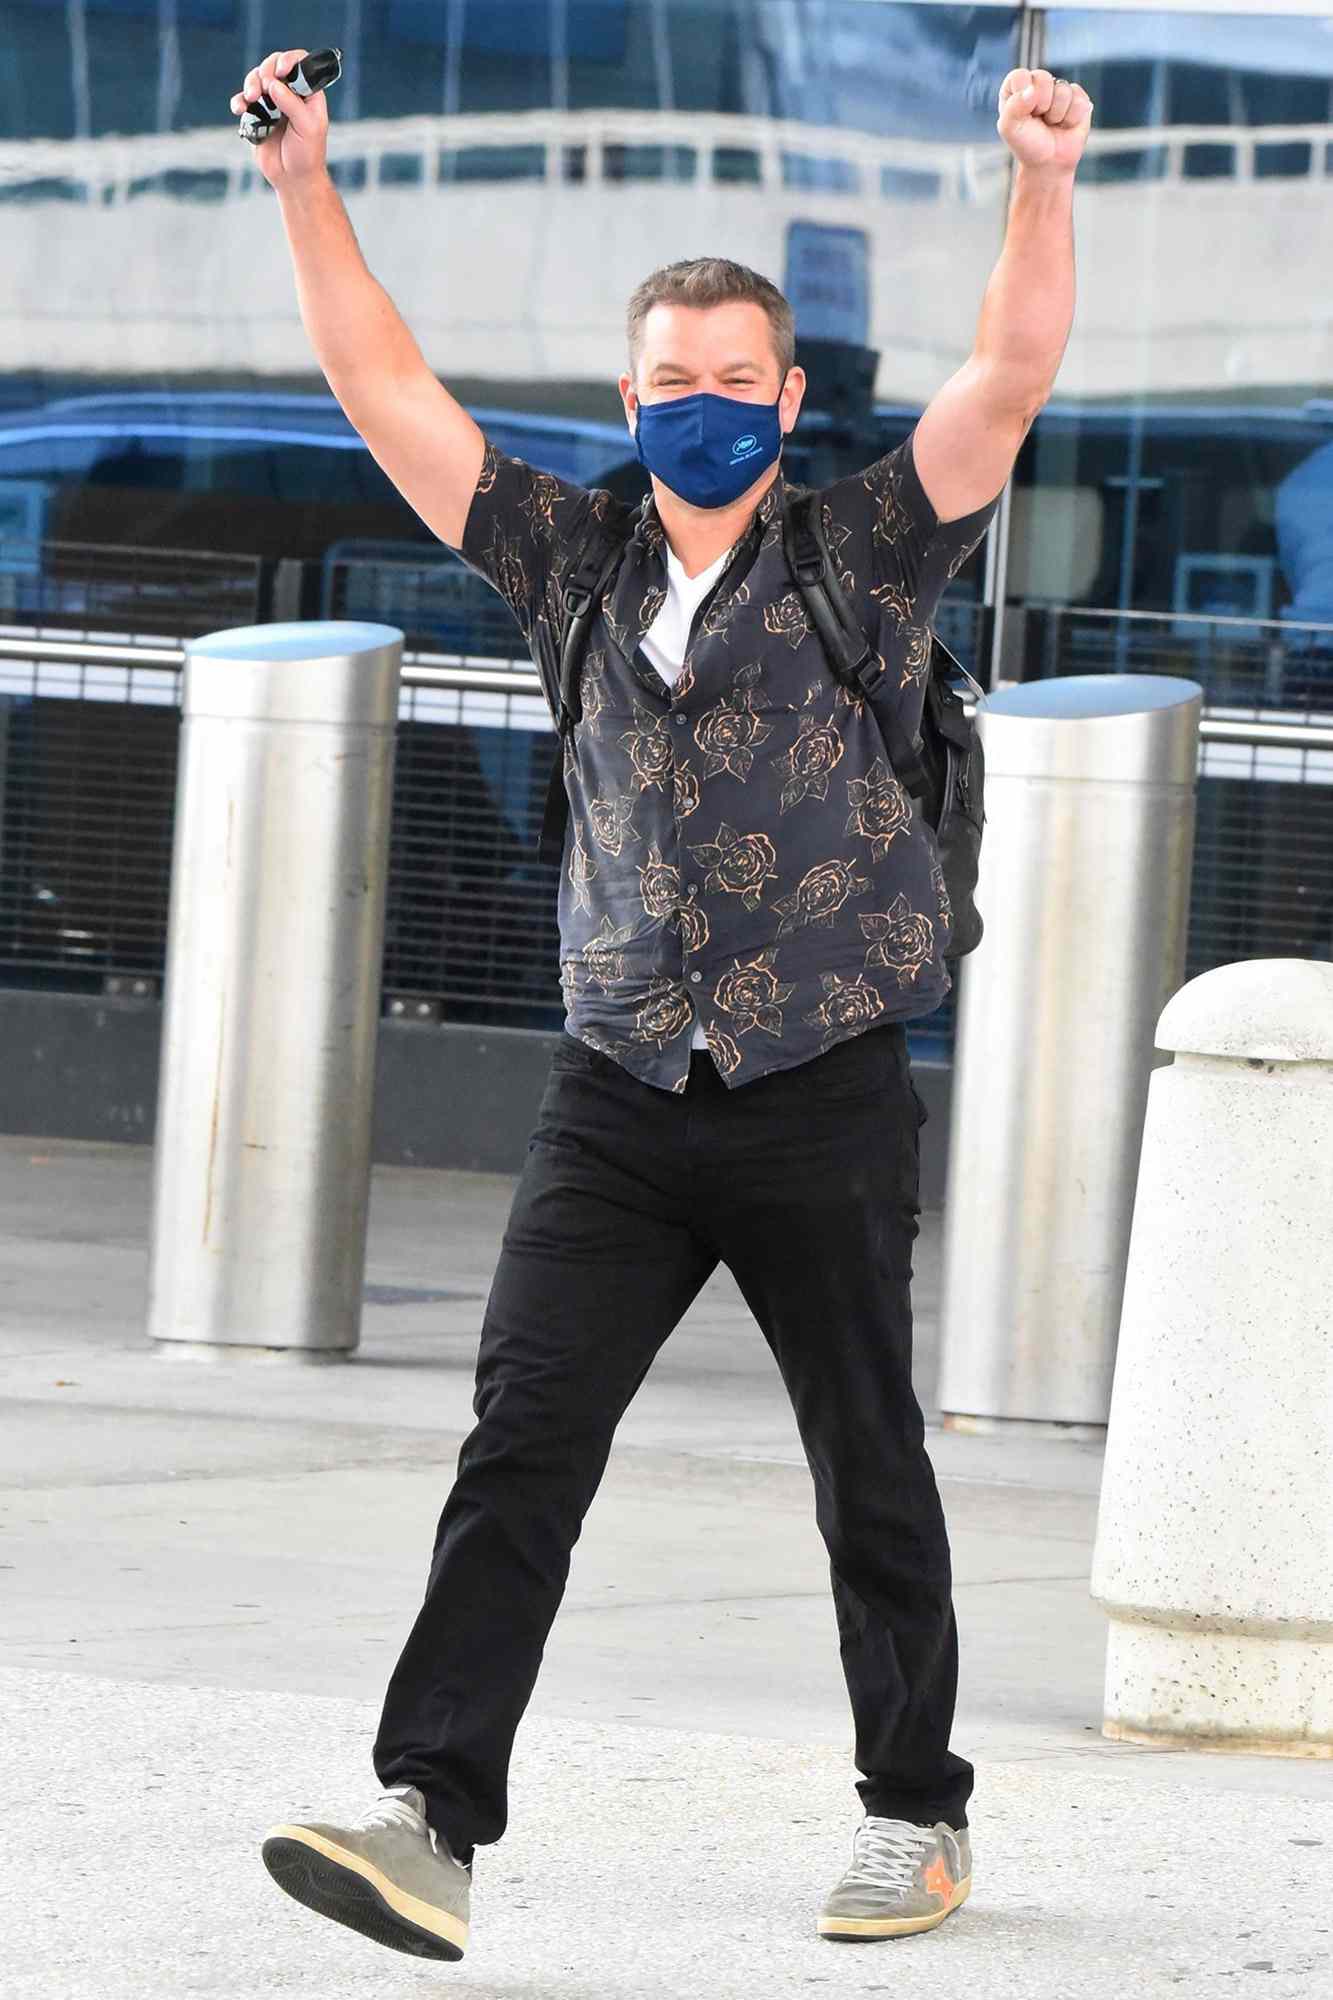 Matt Damon raises his arms triumphantly in NYC